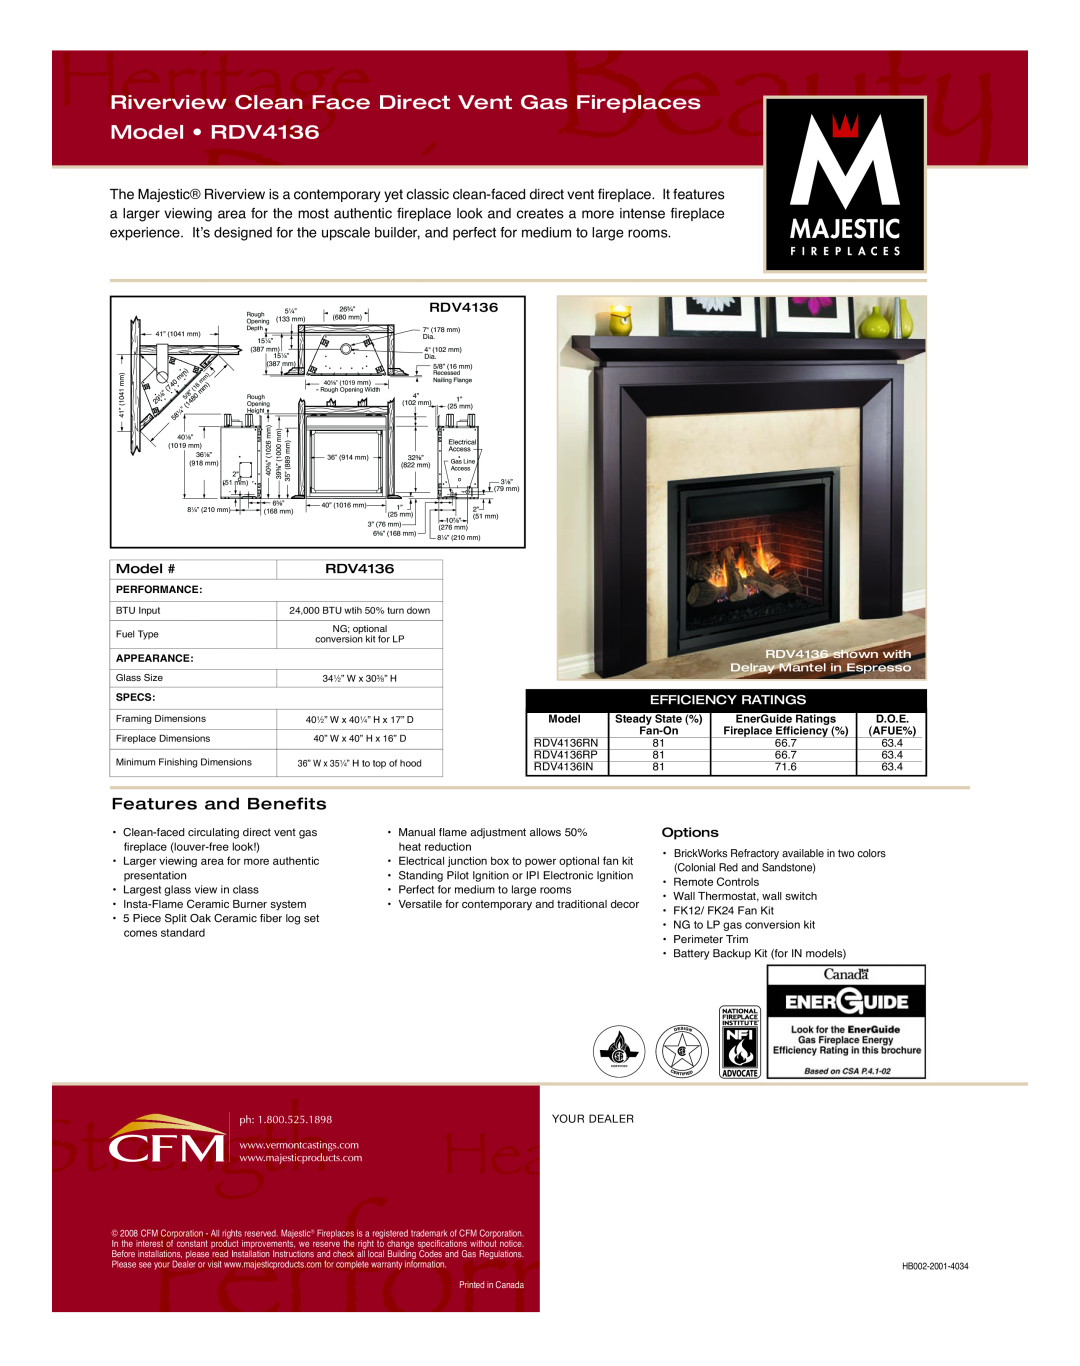 CFM Corporation Riverview Clean Face Direct Vent Gas Fireplaces, Model RDV4136, Features and Bene fits, Model #, Specs 